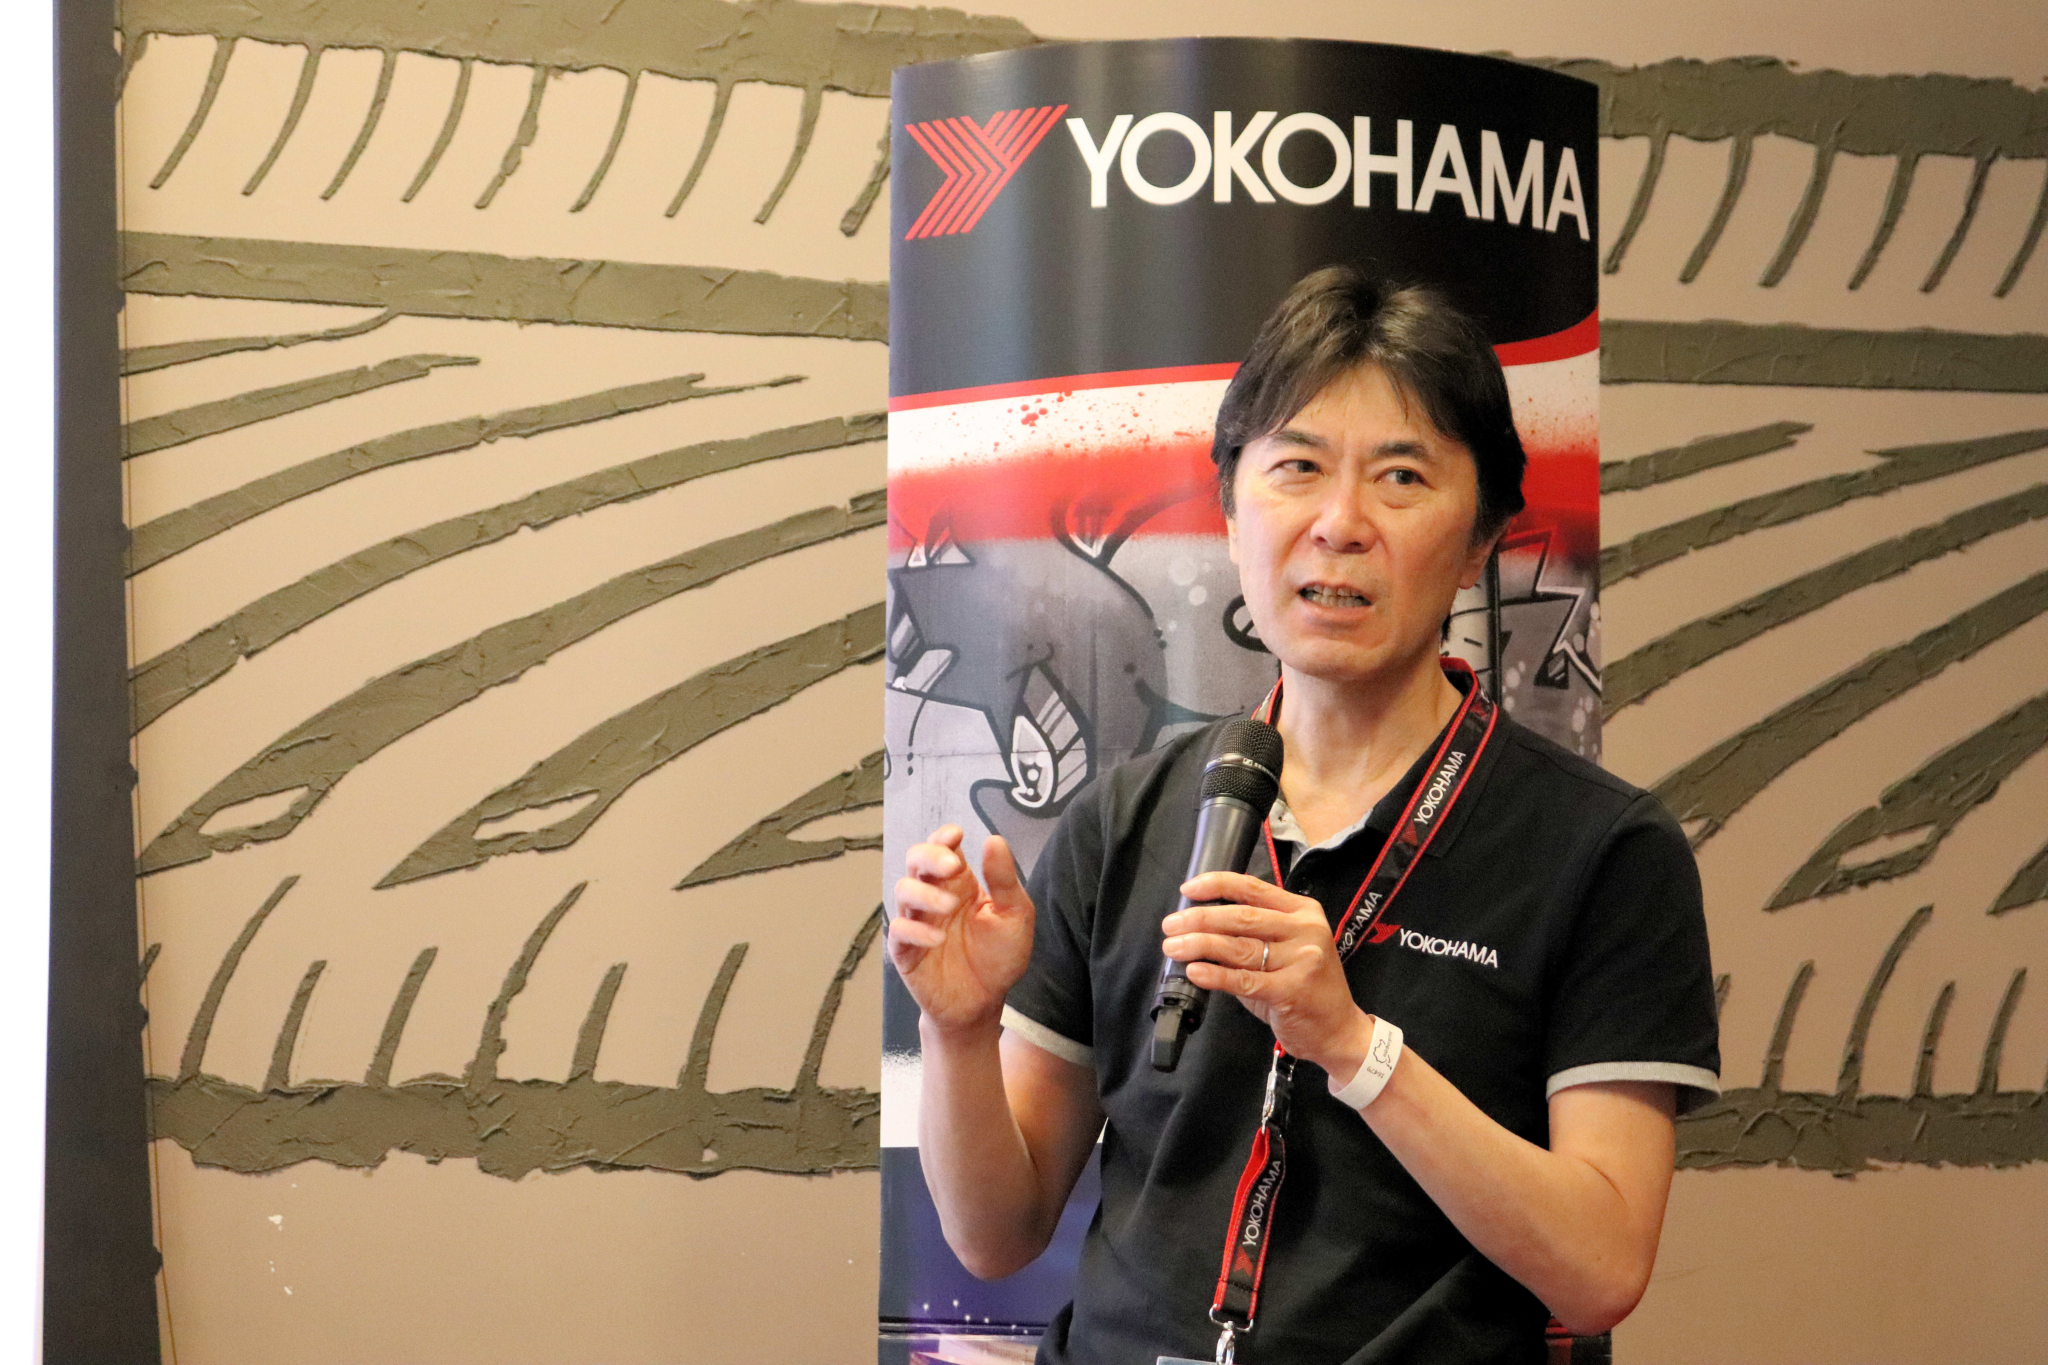 Shioiri leaves Yokohama Europe presidency